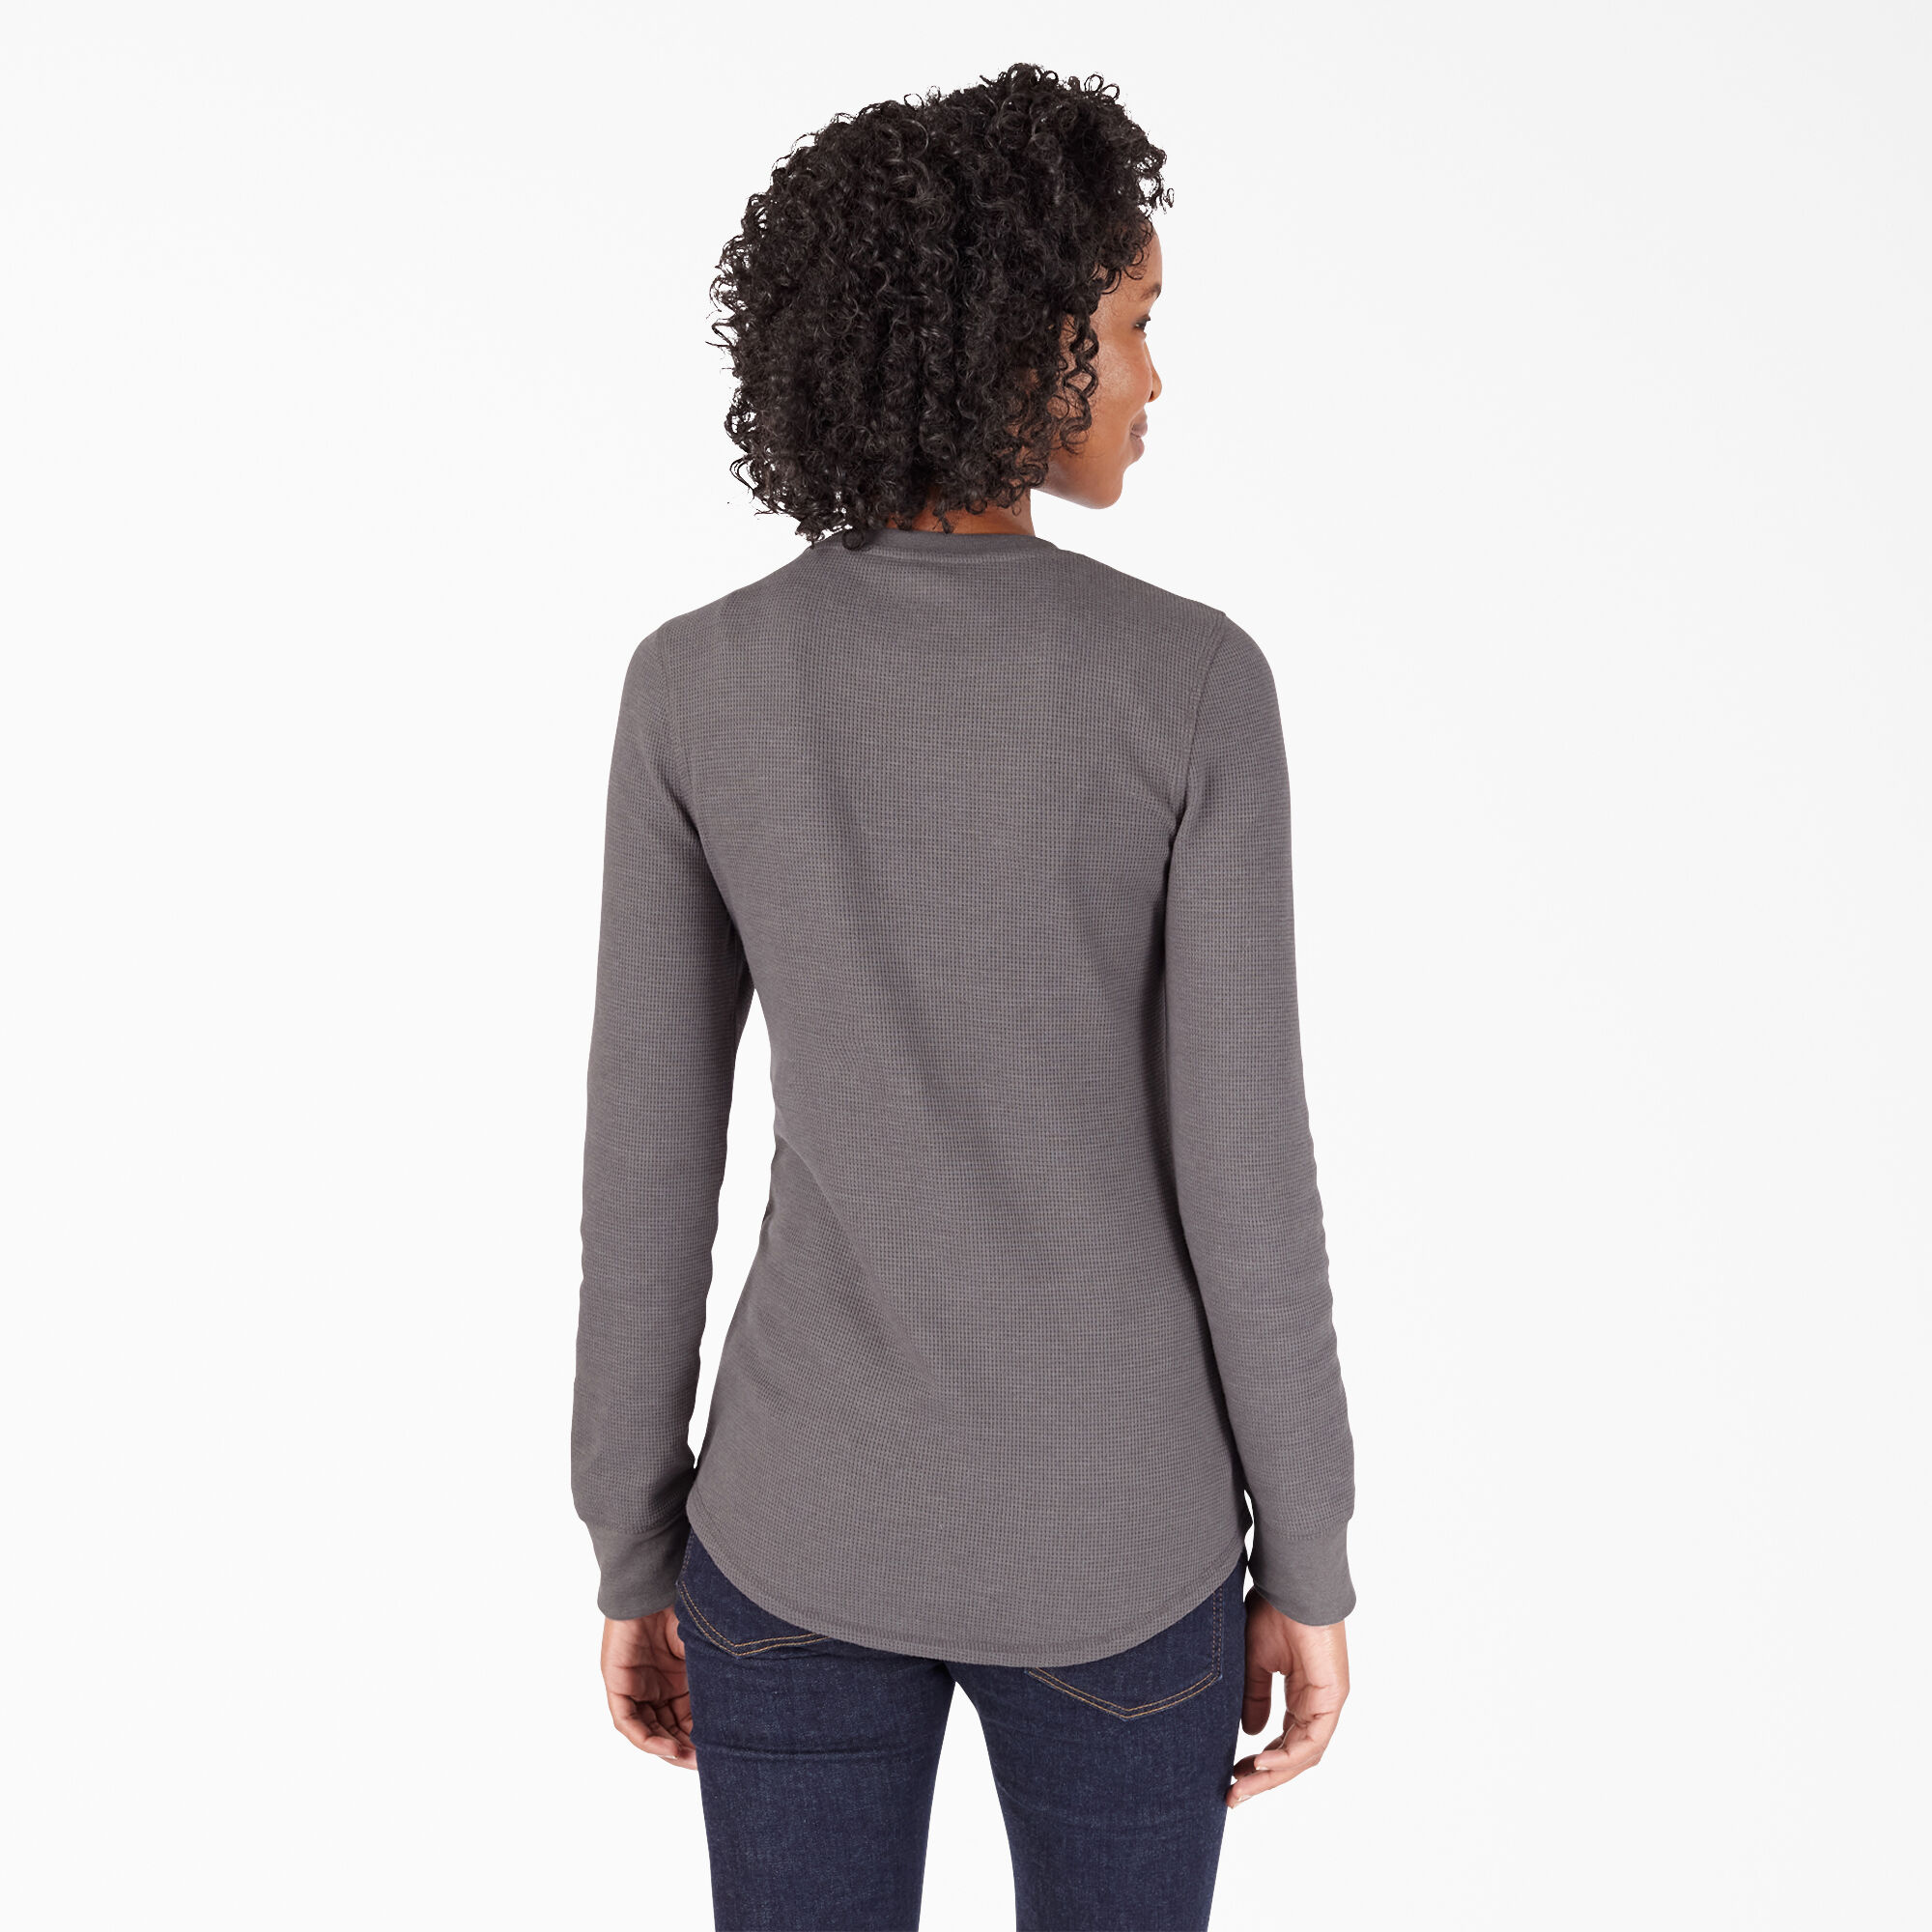 Visiter la boutique DickiesDickies Plus Size Long Sleeve Crew Neck Thermal Shirt d'utilit Professionnelle Femme 